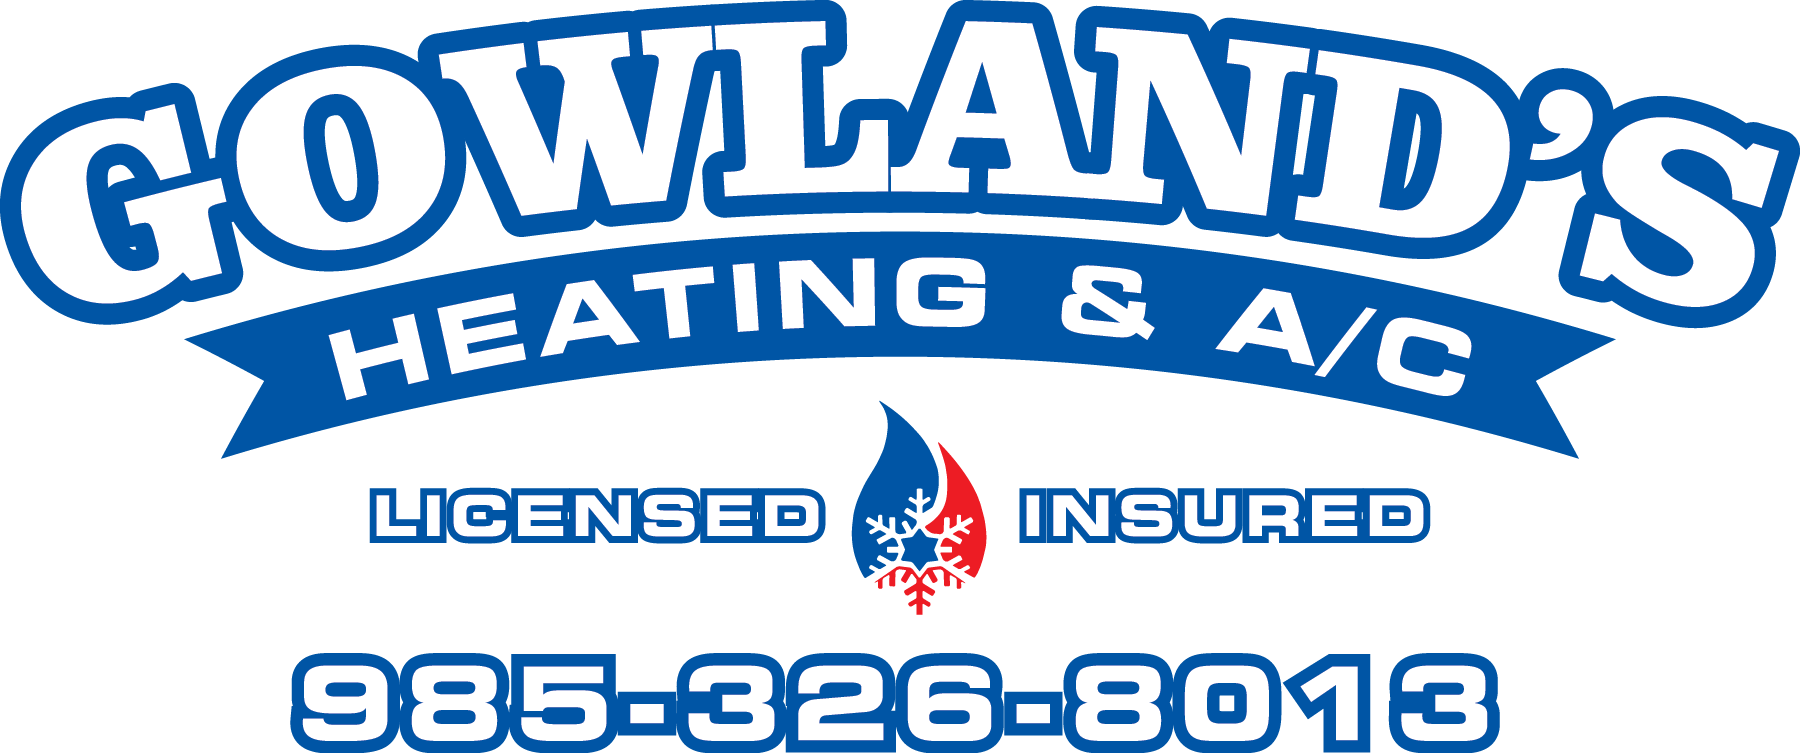 Gowland's Heating & A/C LLC